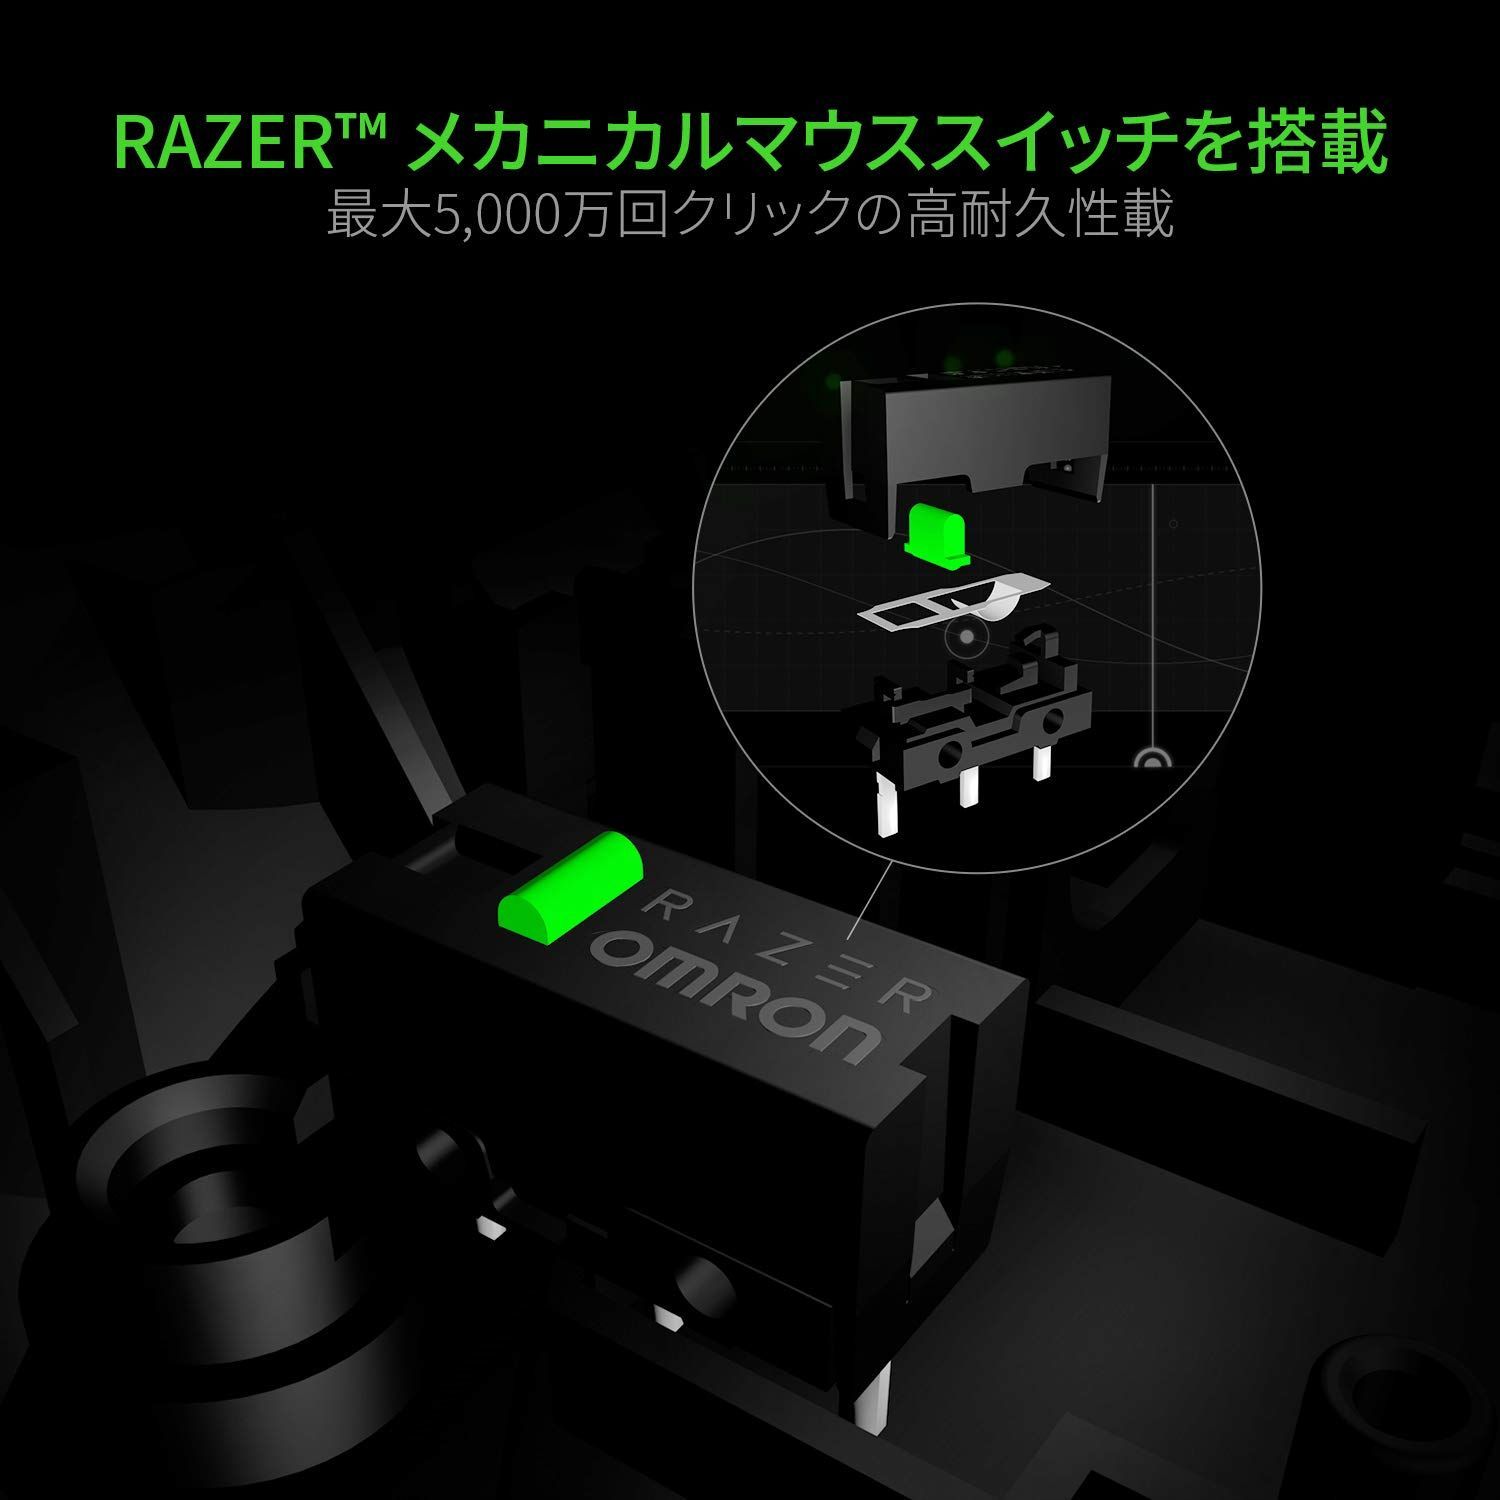 Razer Naga Trinity サイドボタンを2712ボタンに付け替え可能 - よろず ...